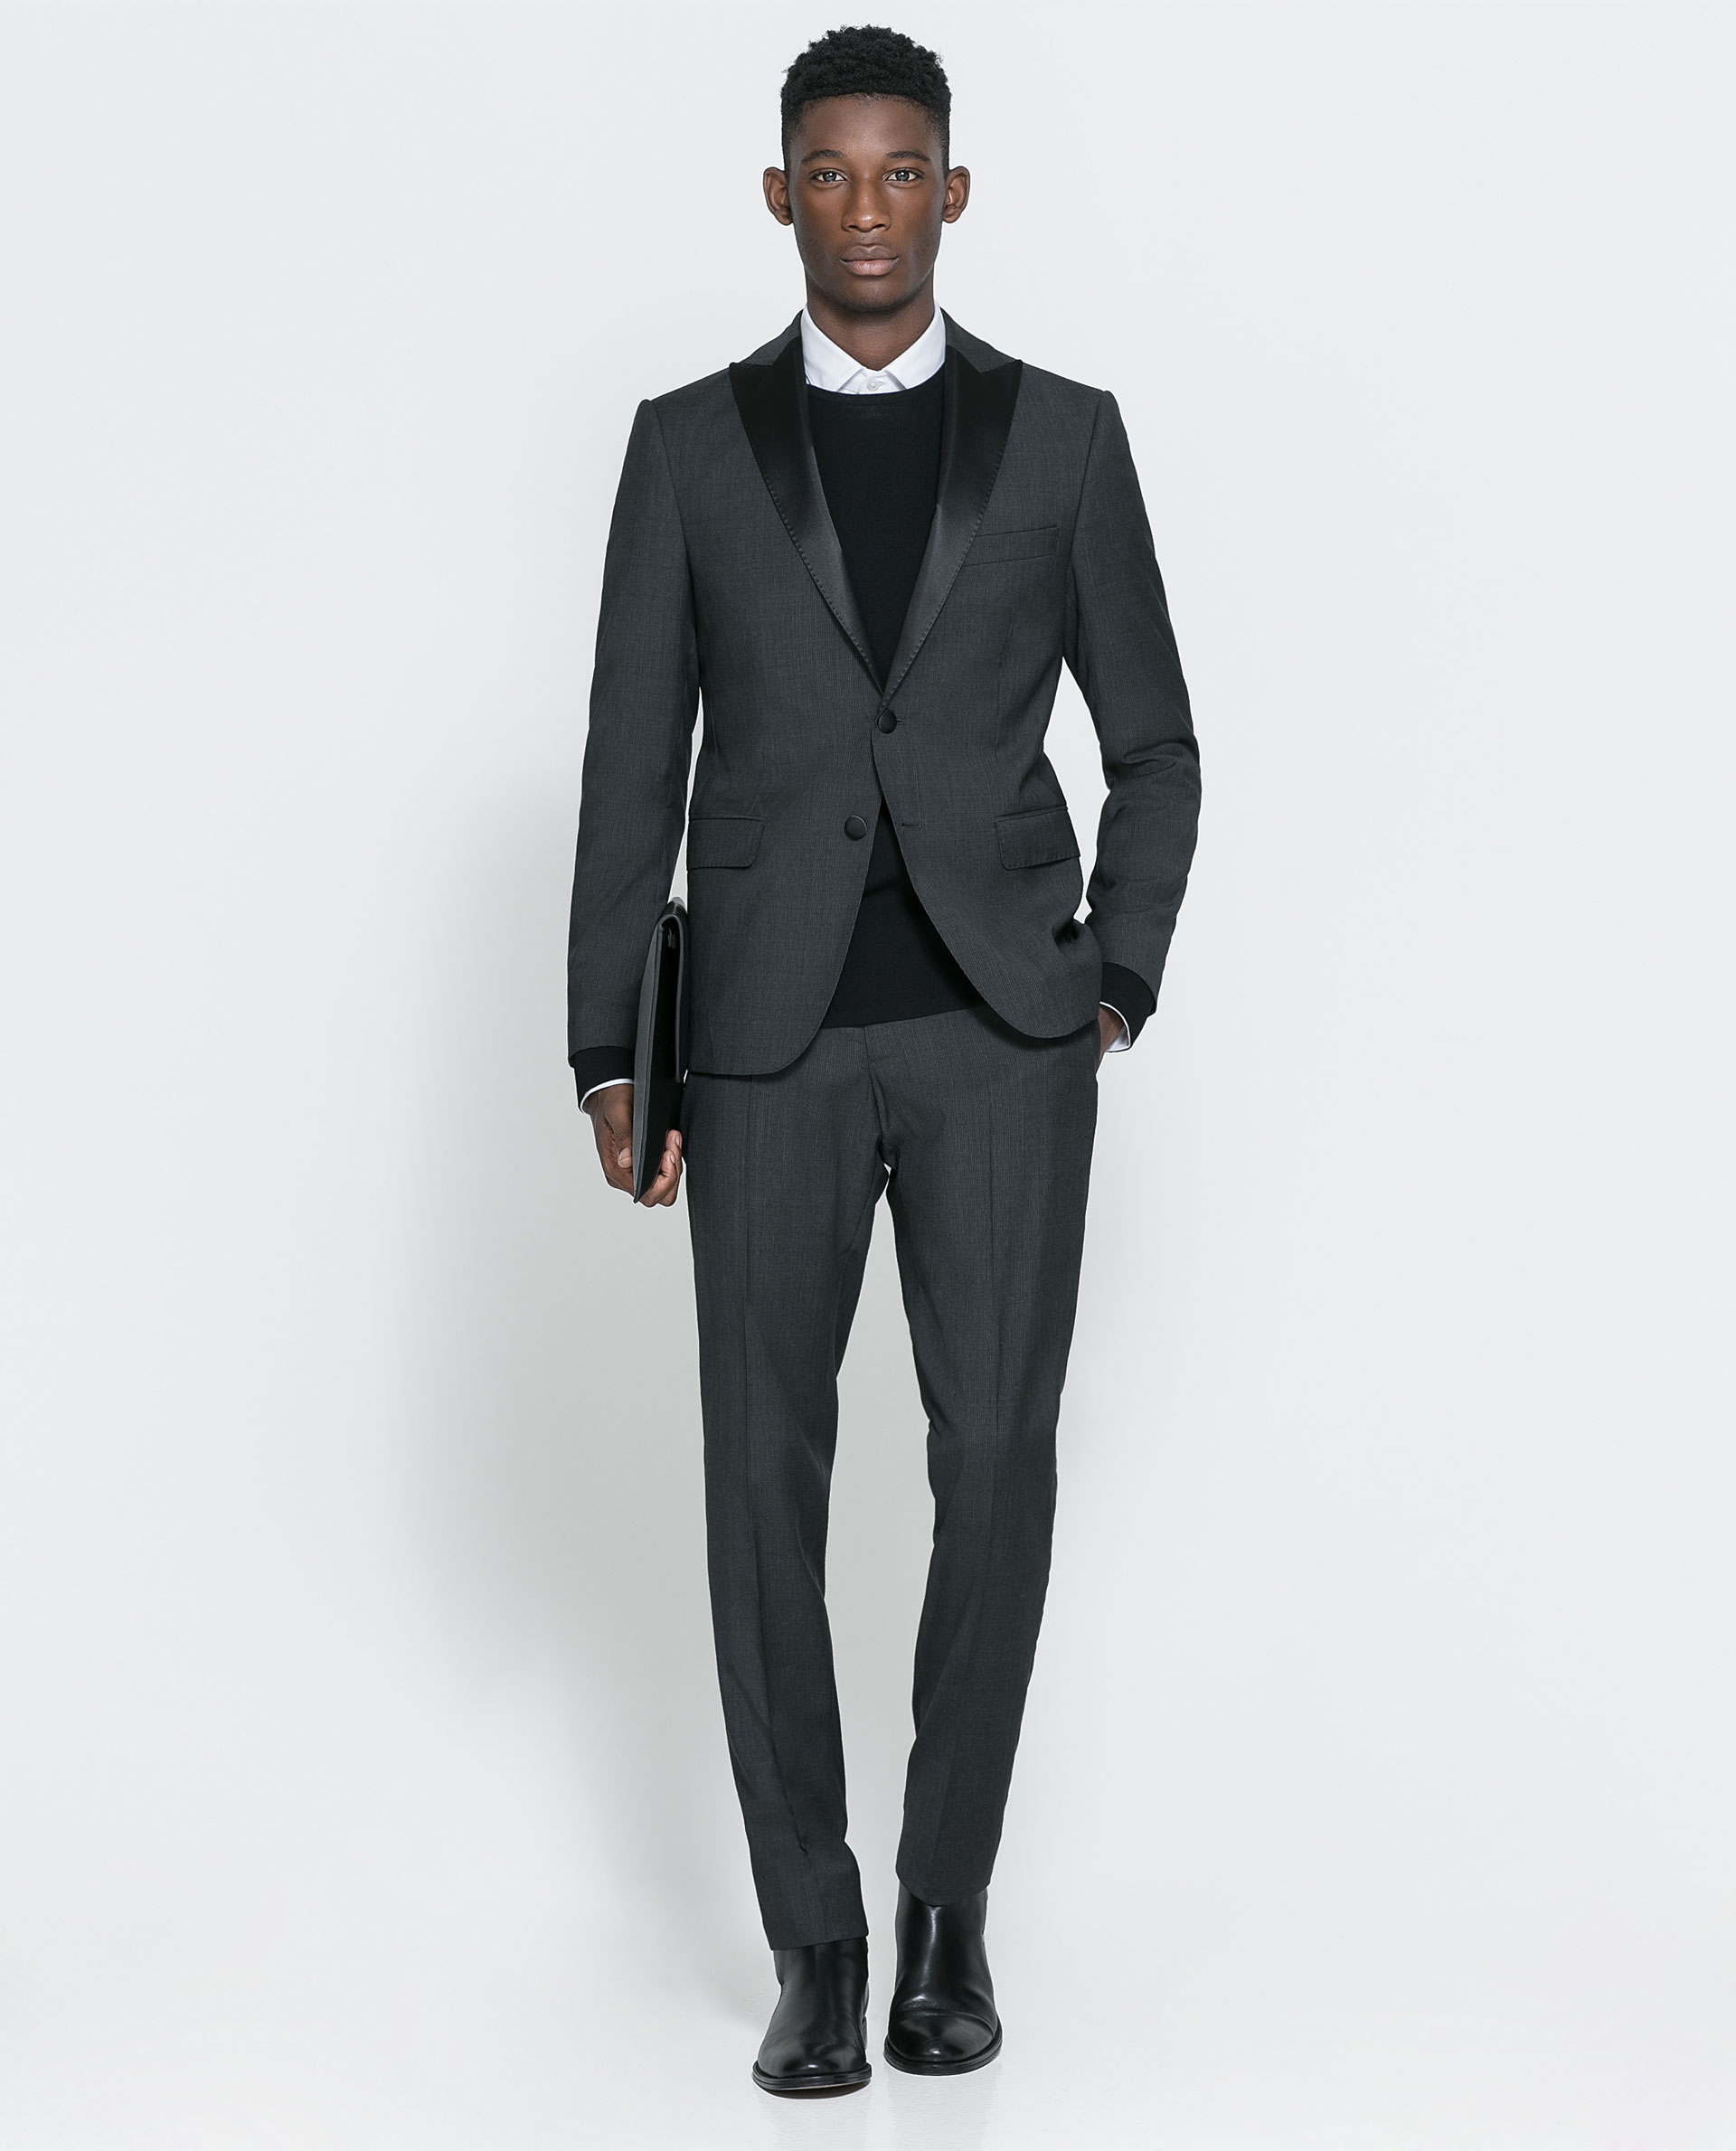 Men's Suits Zara Uk - Lookbooks 2013. Day by day. France, UK, USA ...